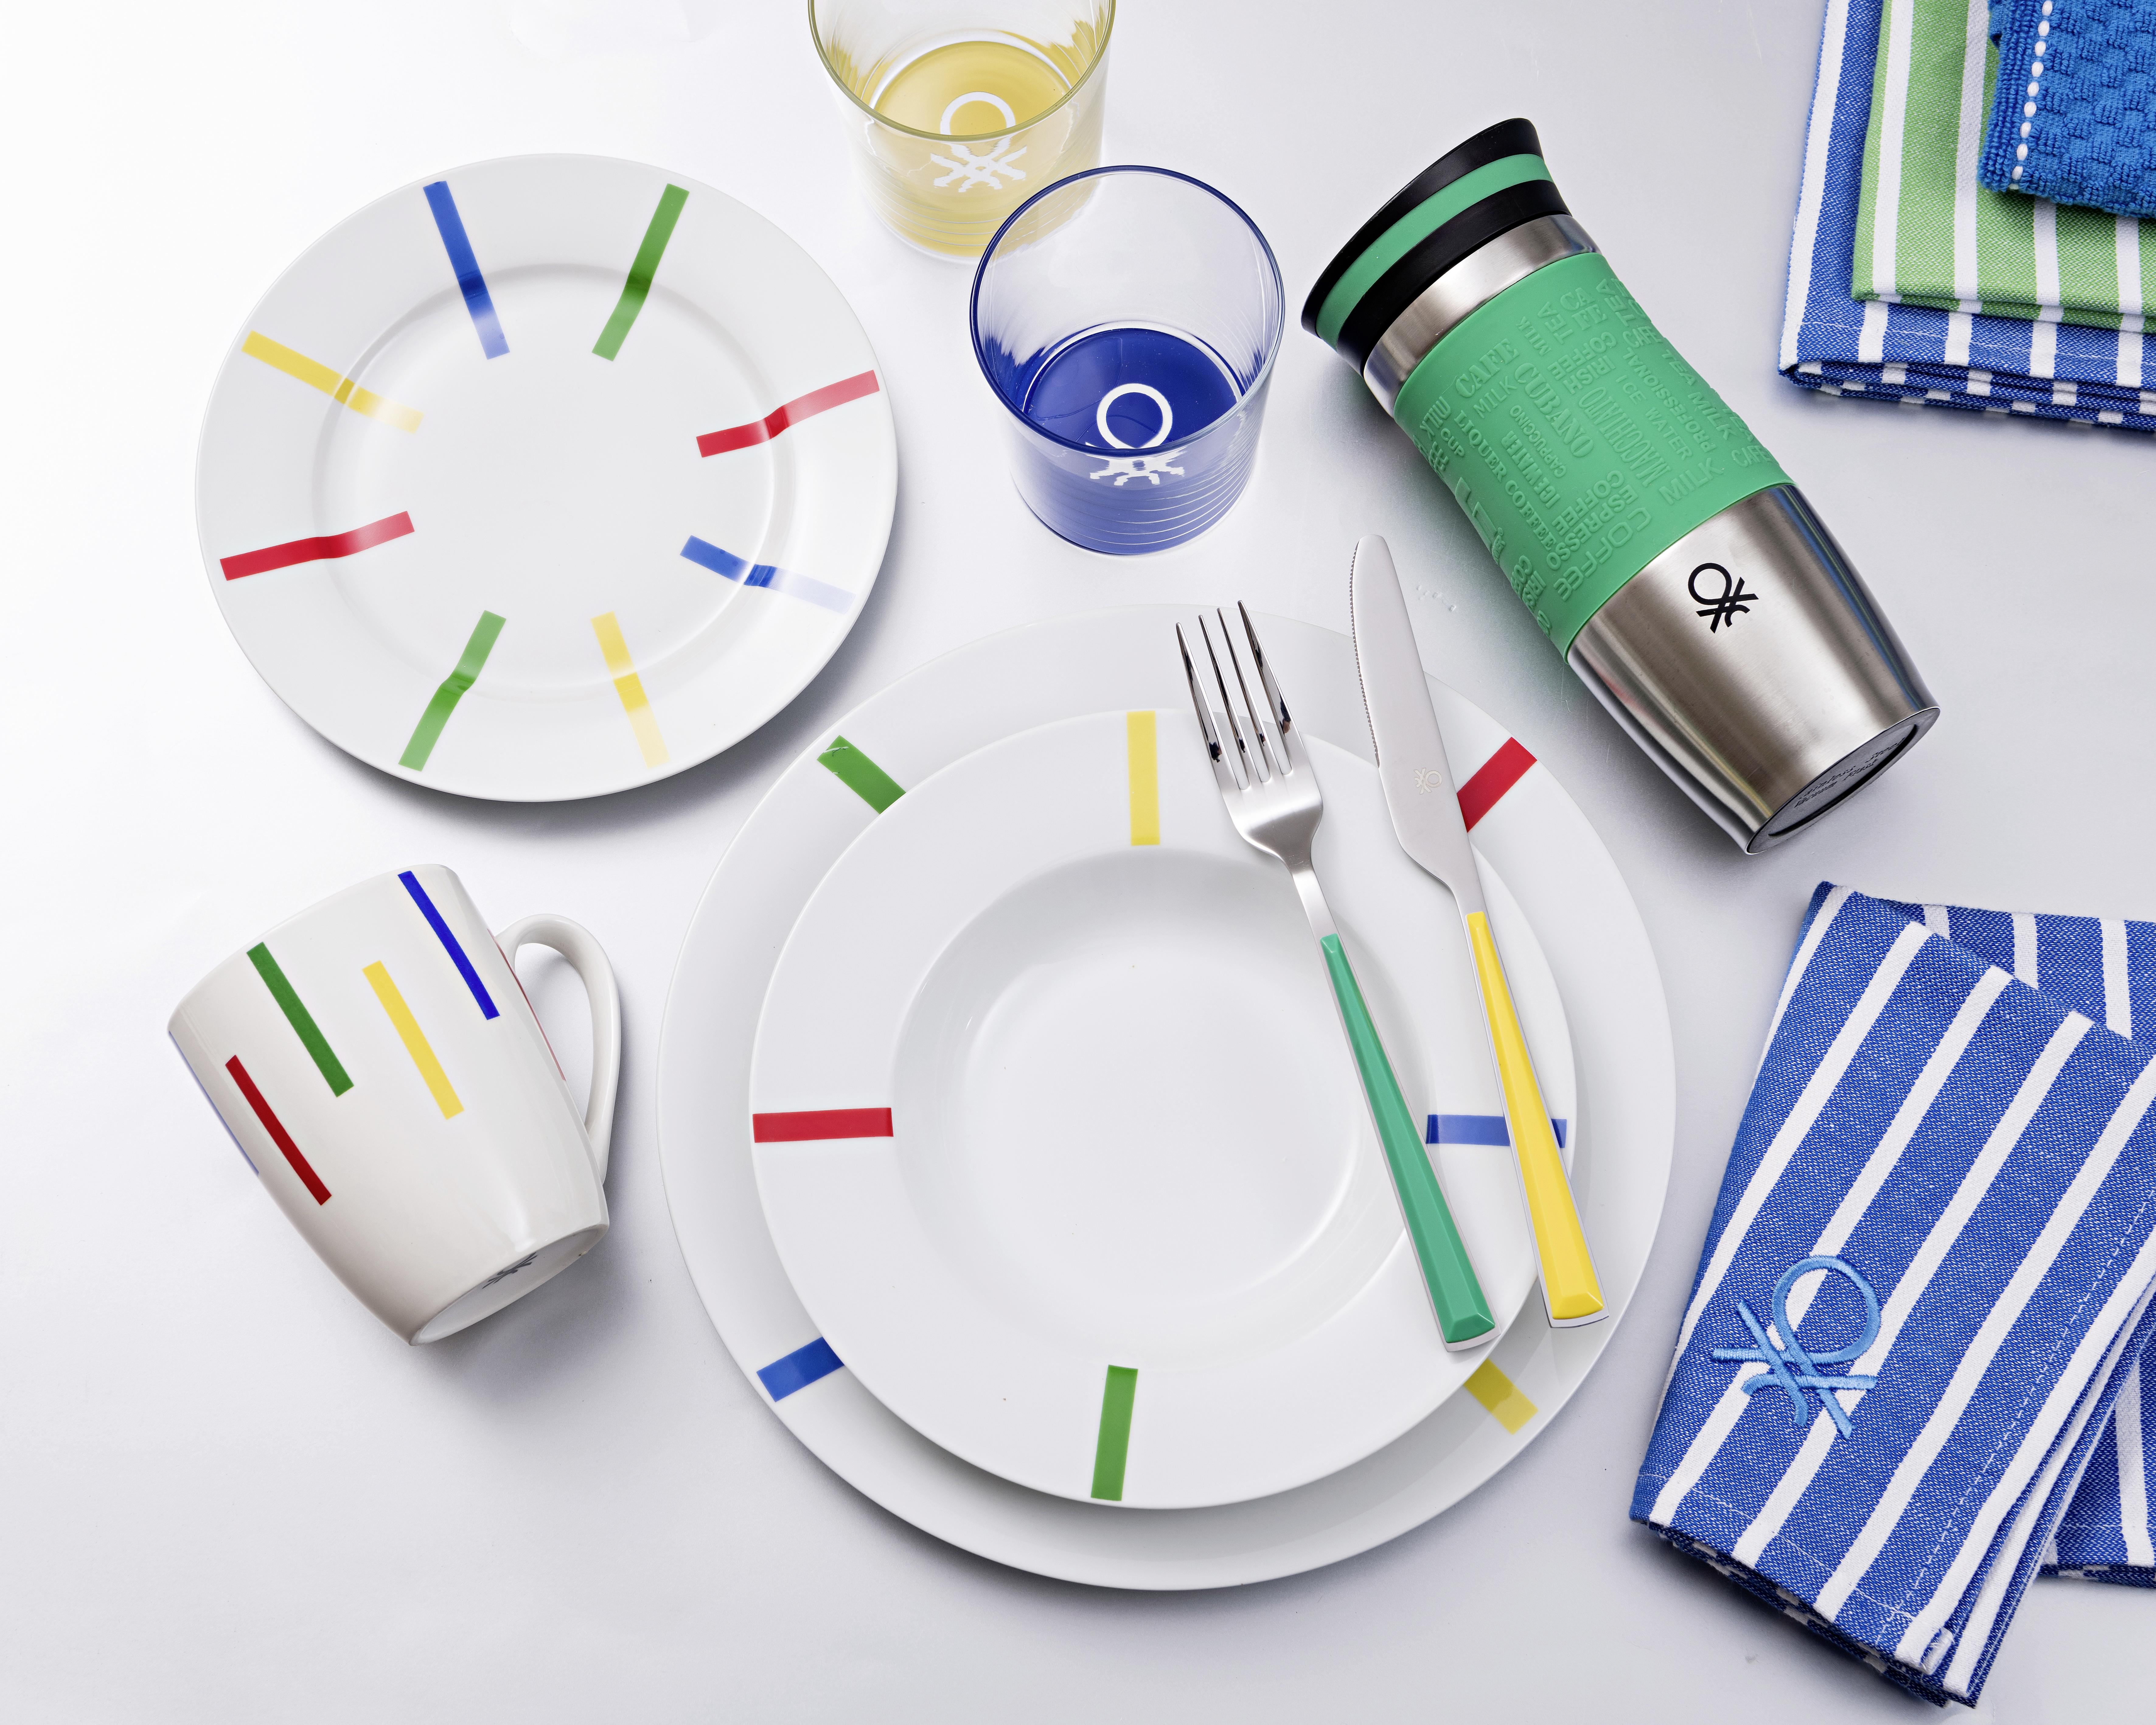 Tafelservice Benetton Weiss/Bunt - Multicolor/Weiß, Basics, Keramik (27/22/20cm) - Benetton